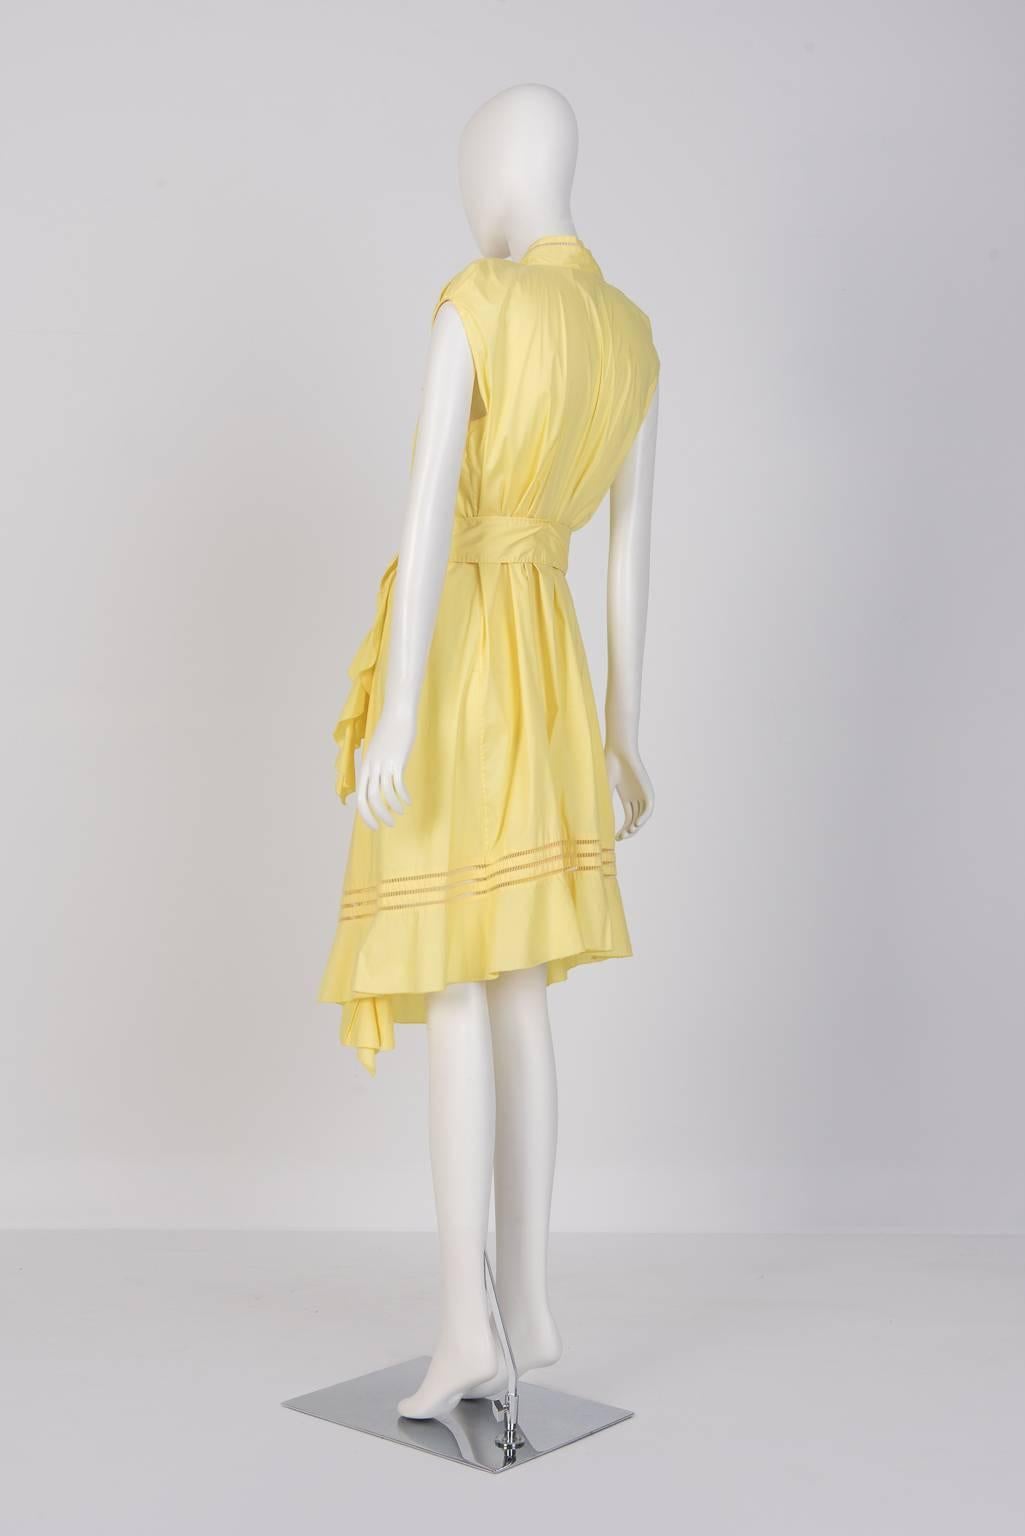  ZAC POSEN Yellow Sun Dress In Excellent Condition For Sale In Xiamen, Fujian